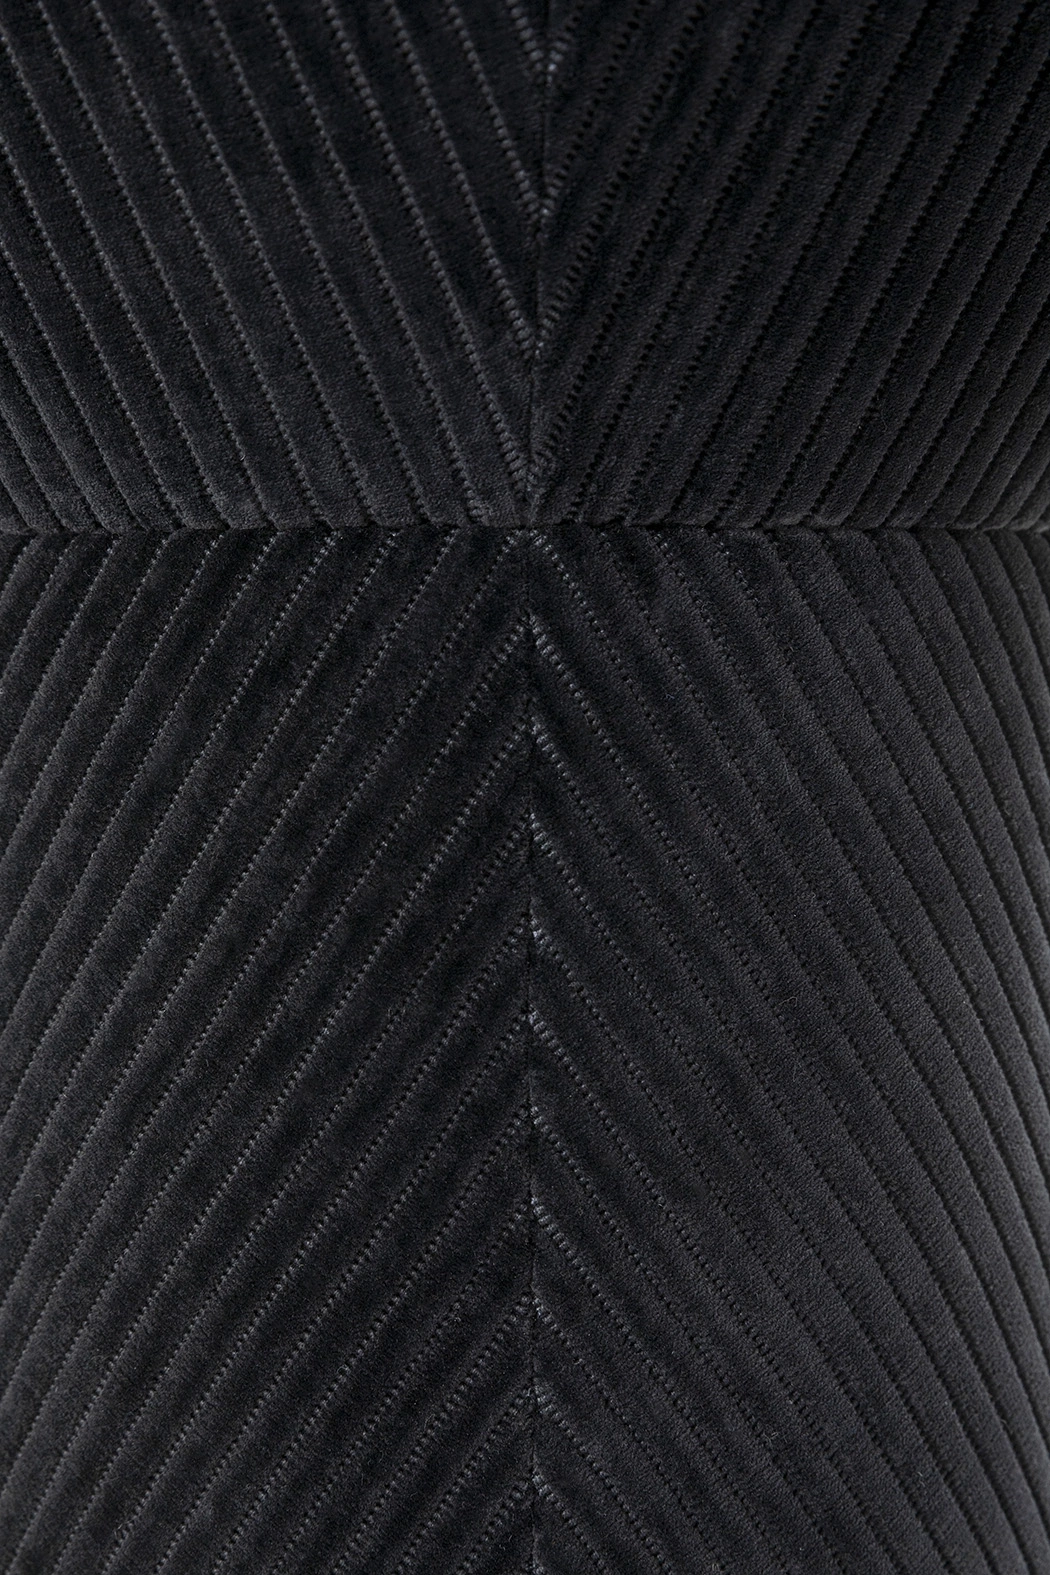 Gemini stool - Jean-Baptiste Fastrez - Stool - Galerie kreo